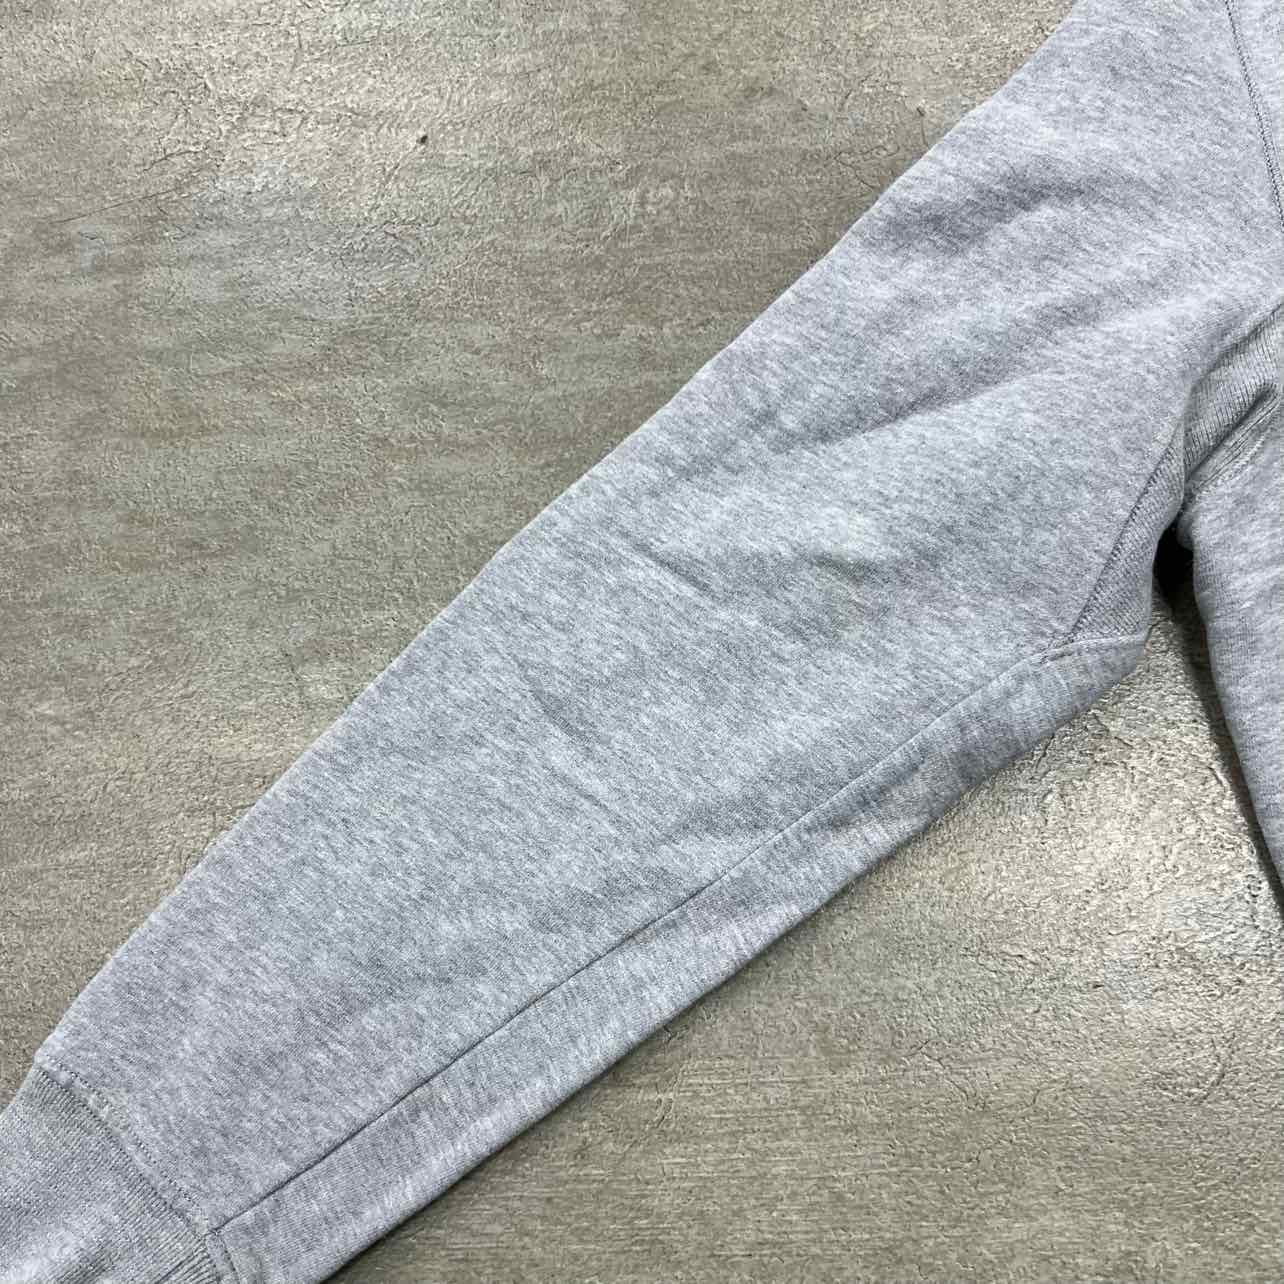 Stone Island Crewneck Sweater "PATCH" Grey Used Size M